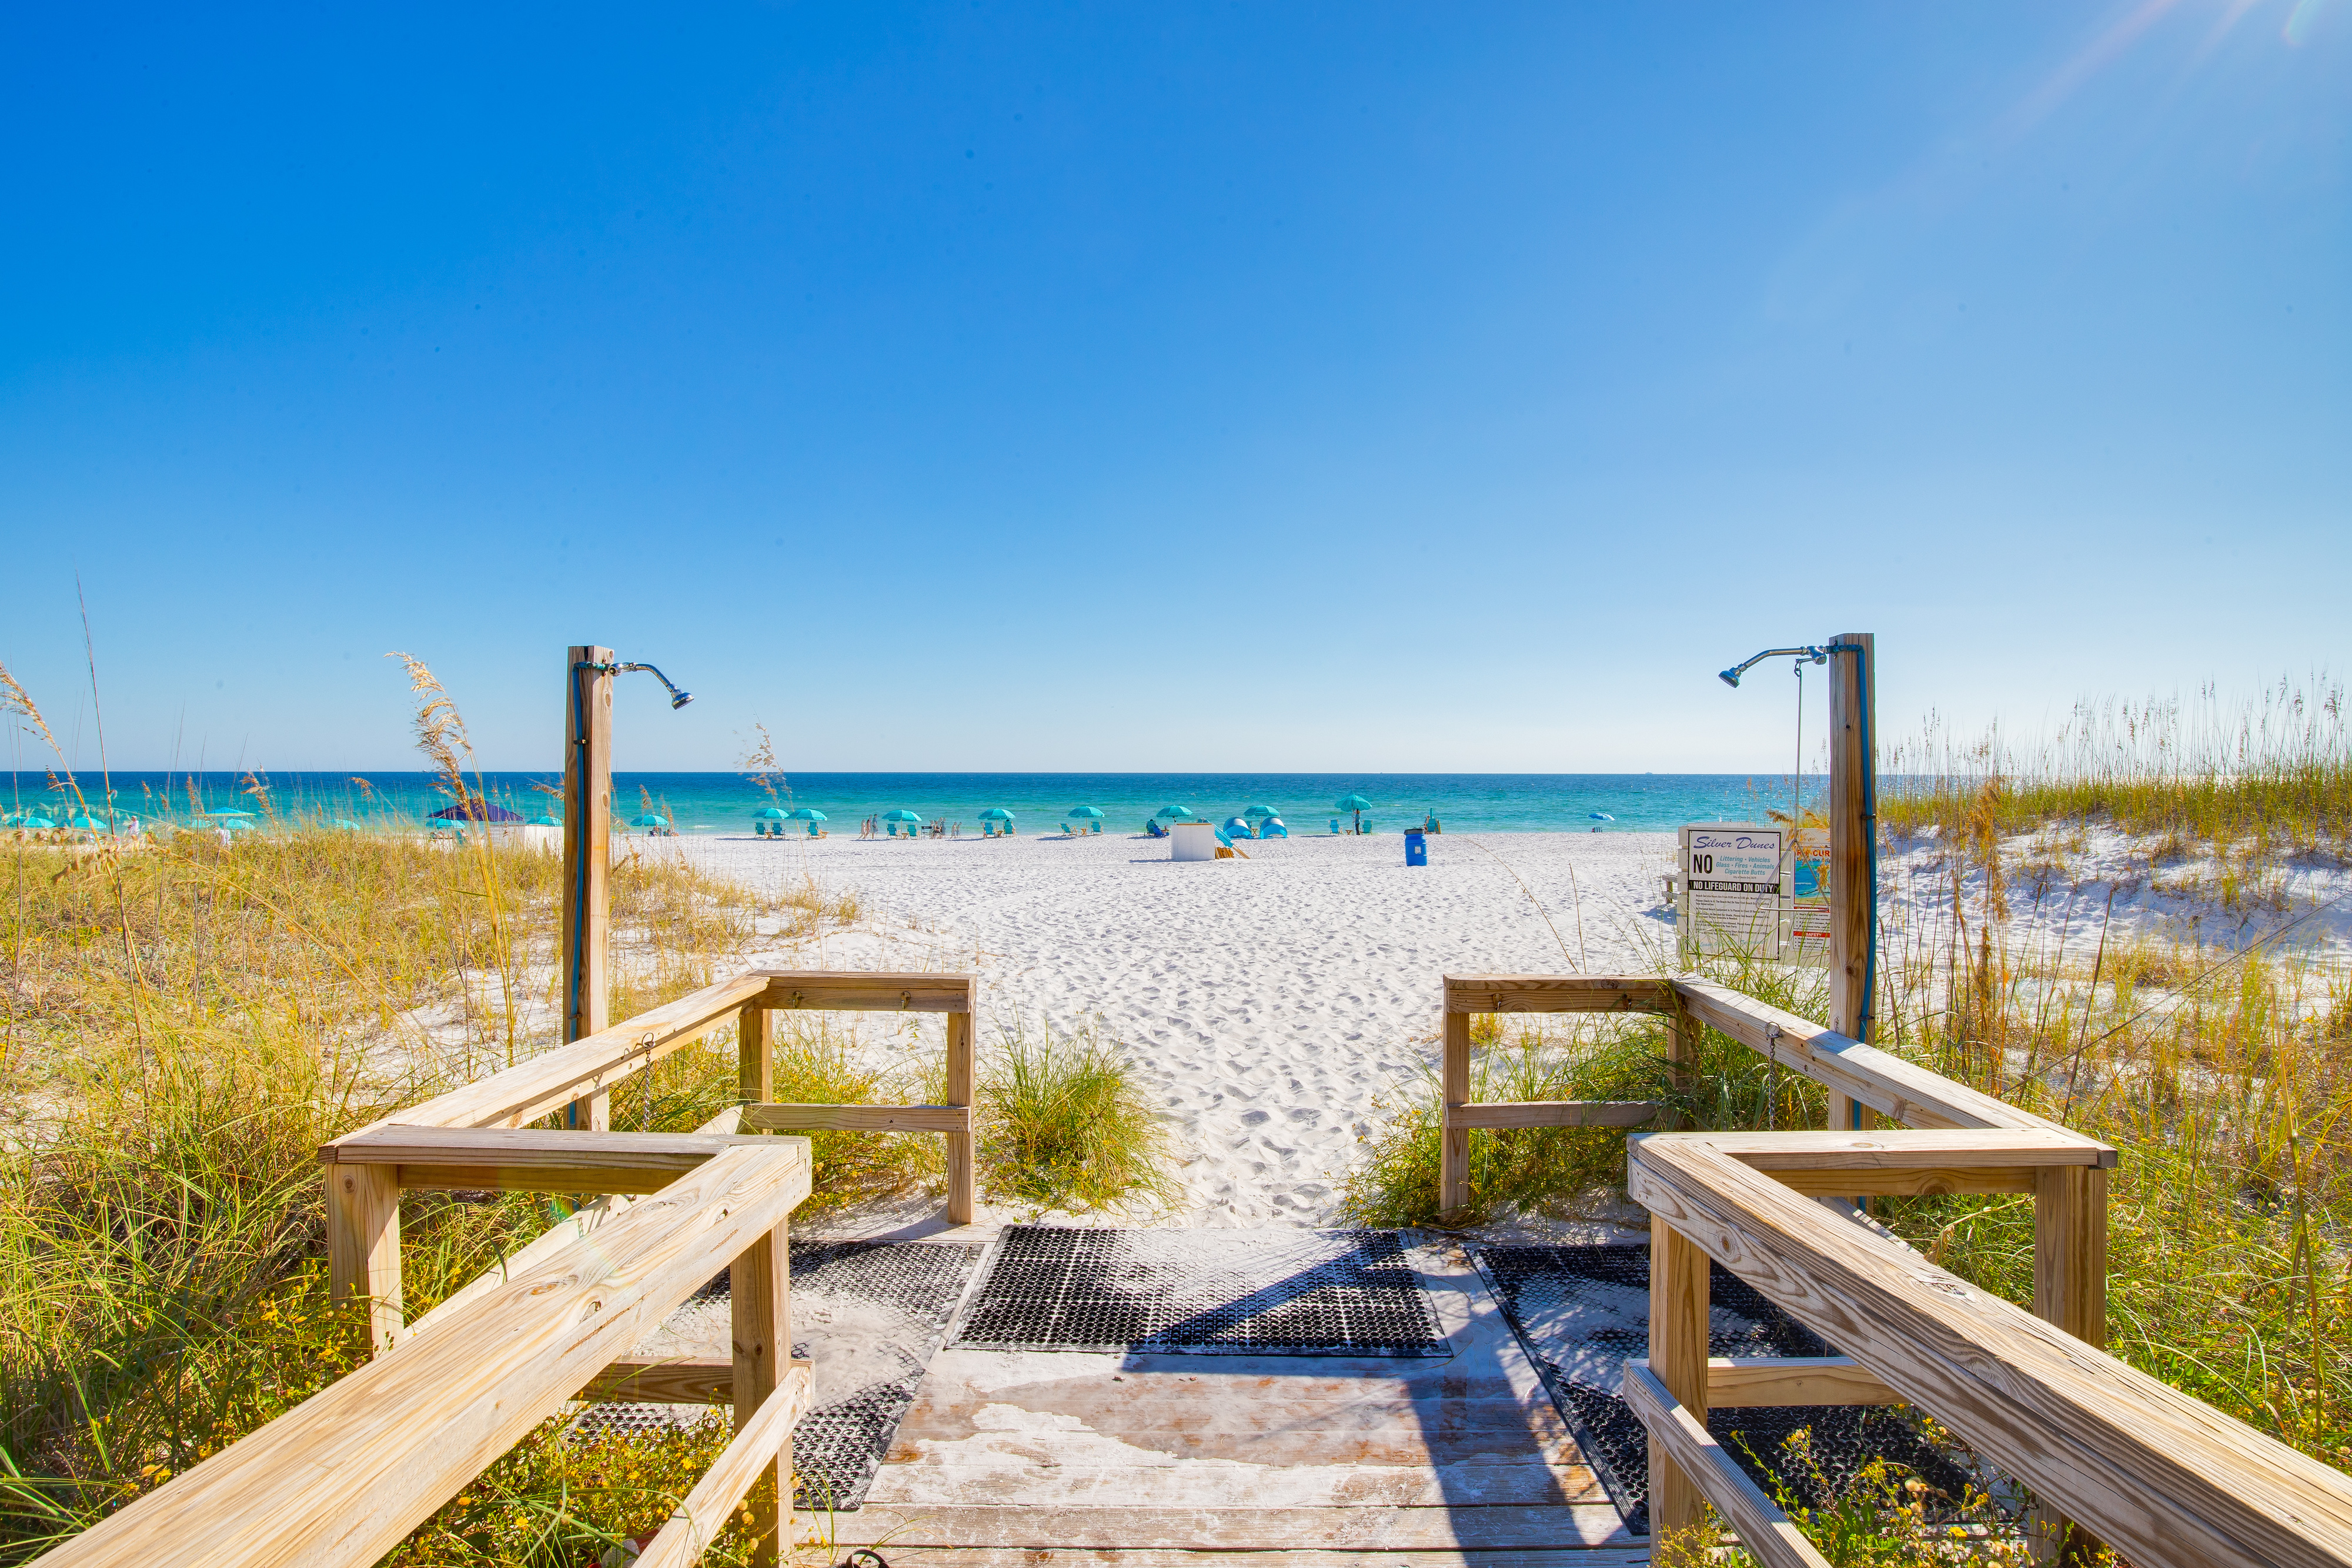 The beach access at Silver Dunes Condominium in Destin, FL on a bright blue sky day.